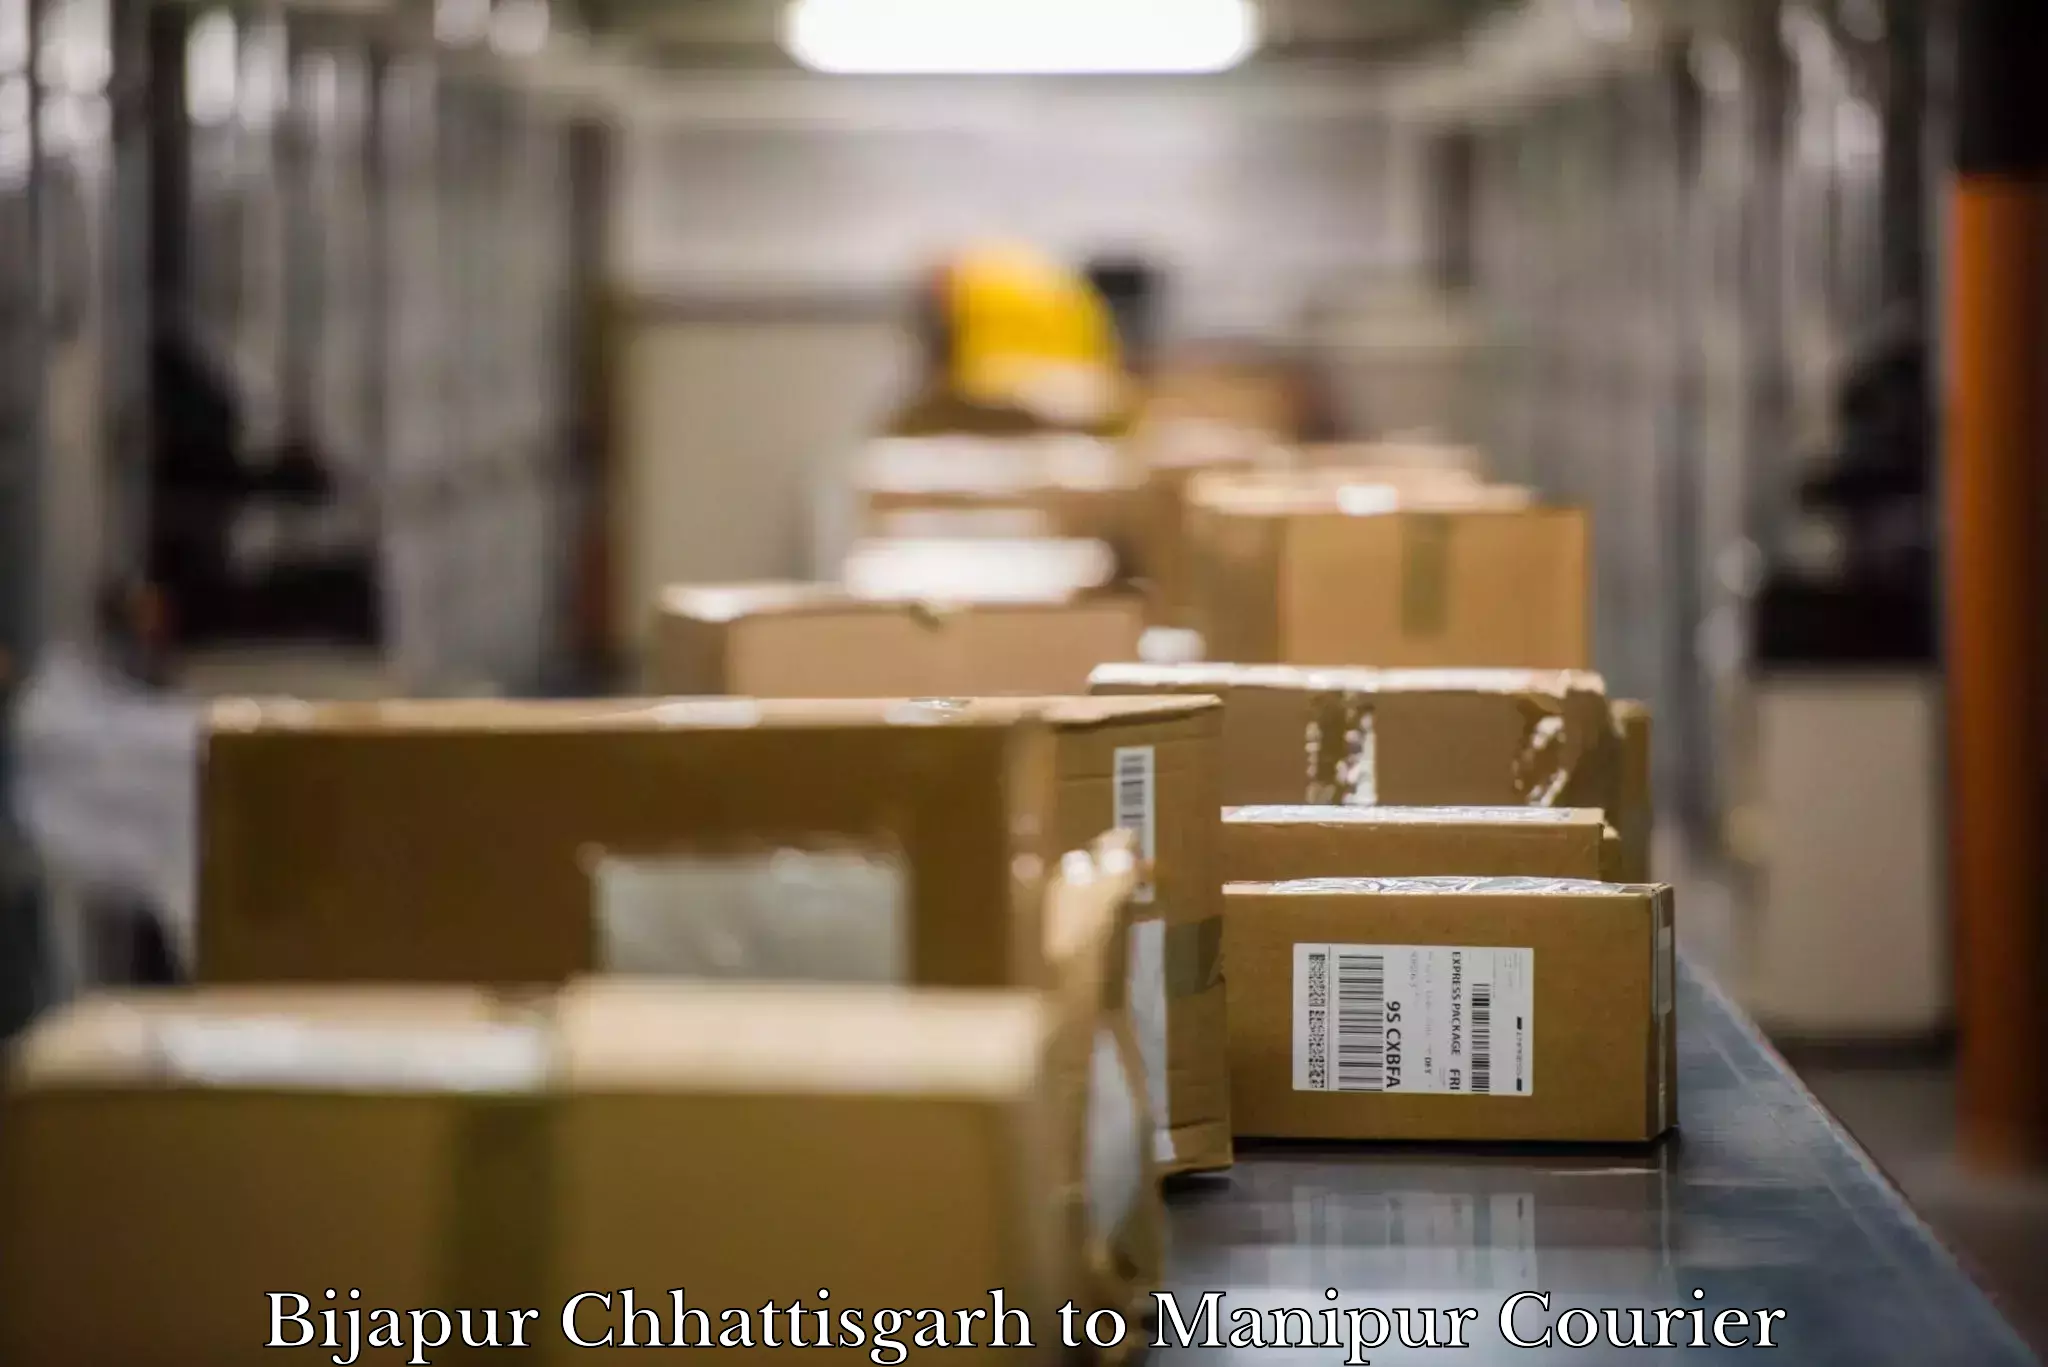 Budget-friendly movers Bijapur Chhattisgarh to Manipur